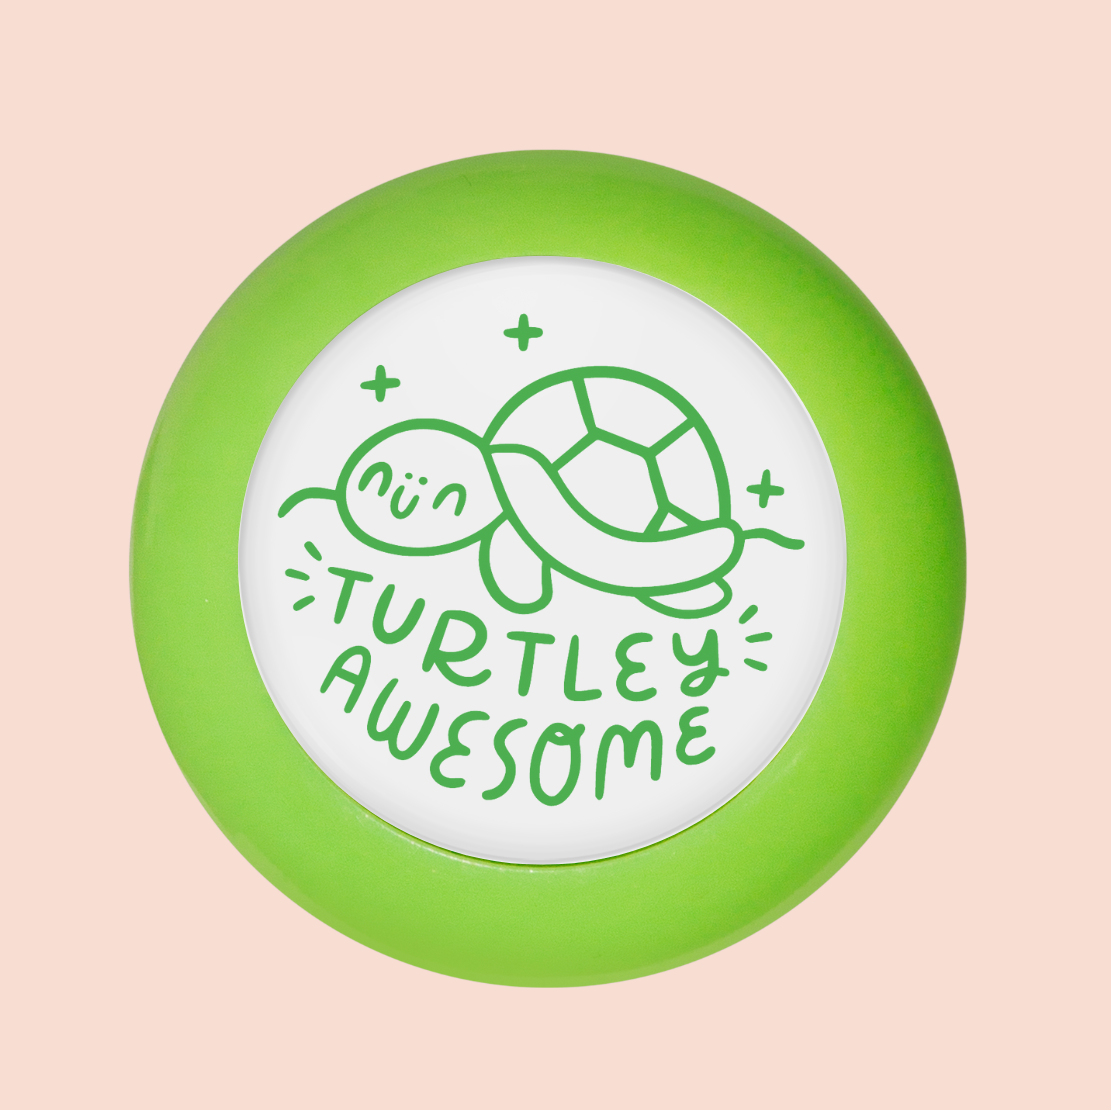 Turtle Stamp